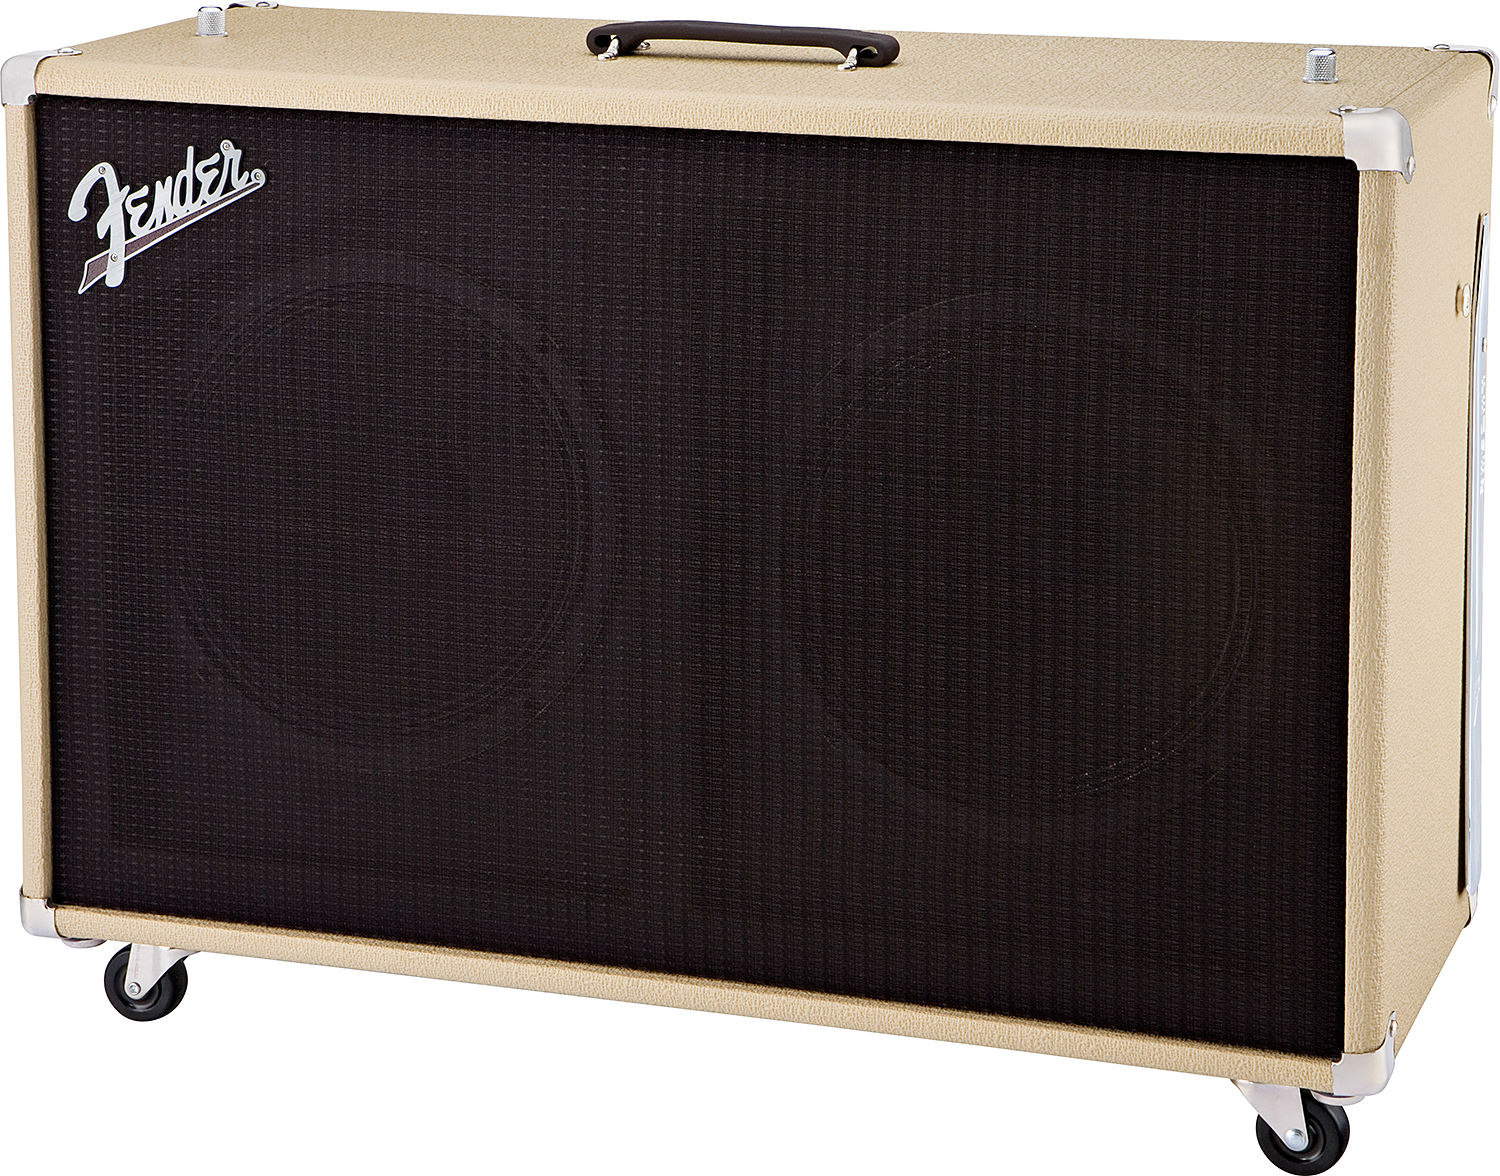 Fender Super Sonic 60 212 Enclosure 2x12 120w Blonde - Elektrische gitaar speakerkast - Variation 1